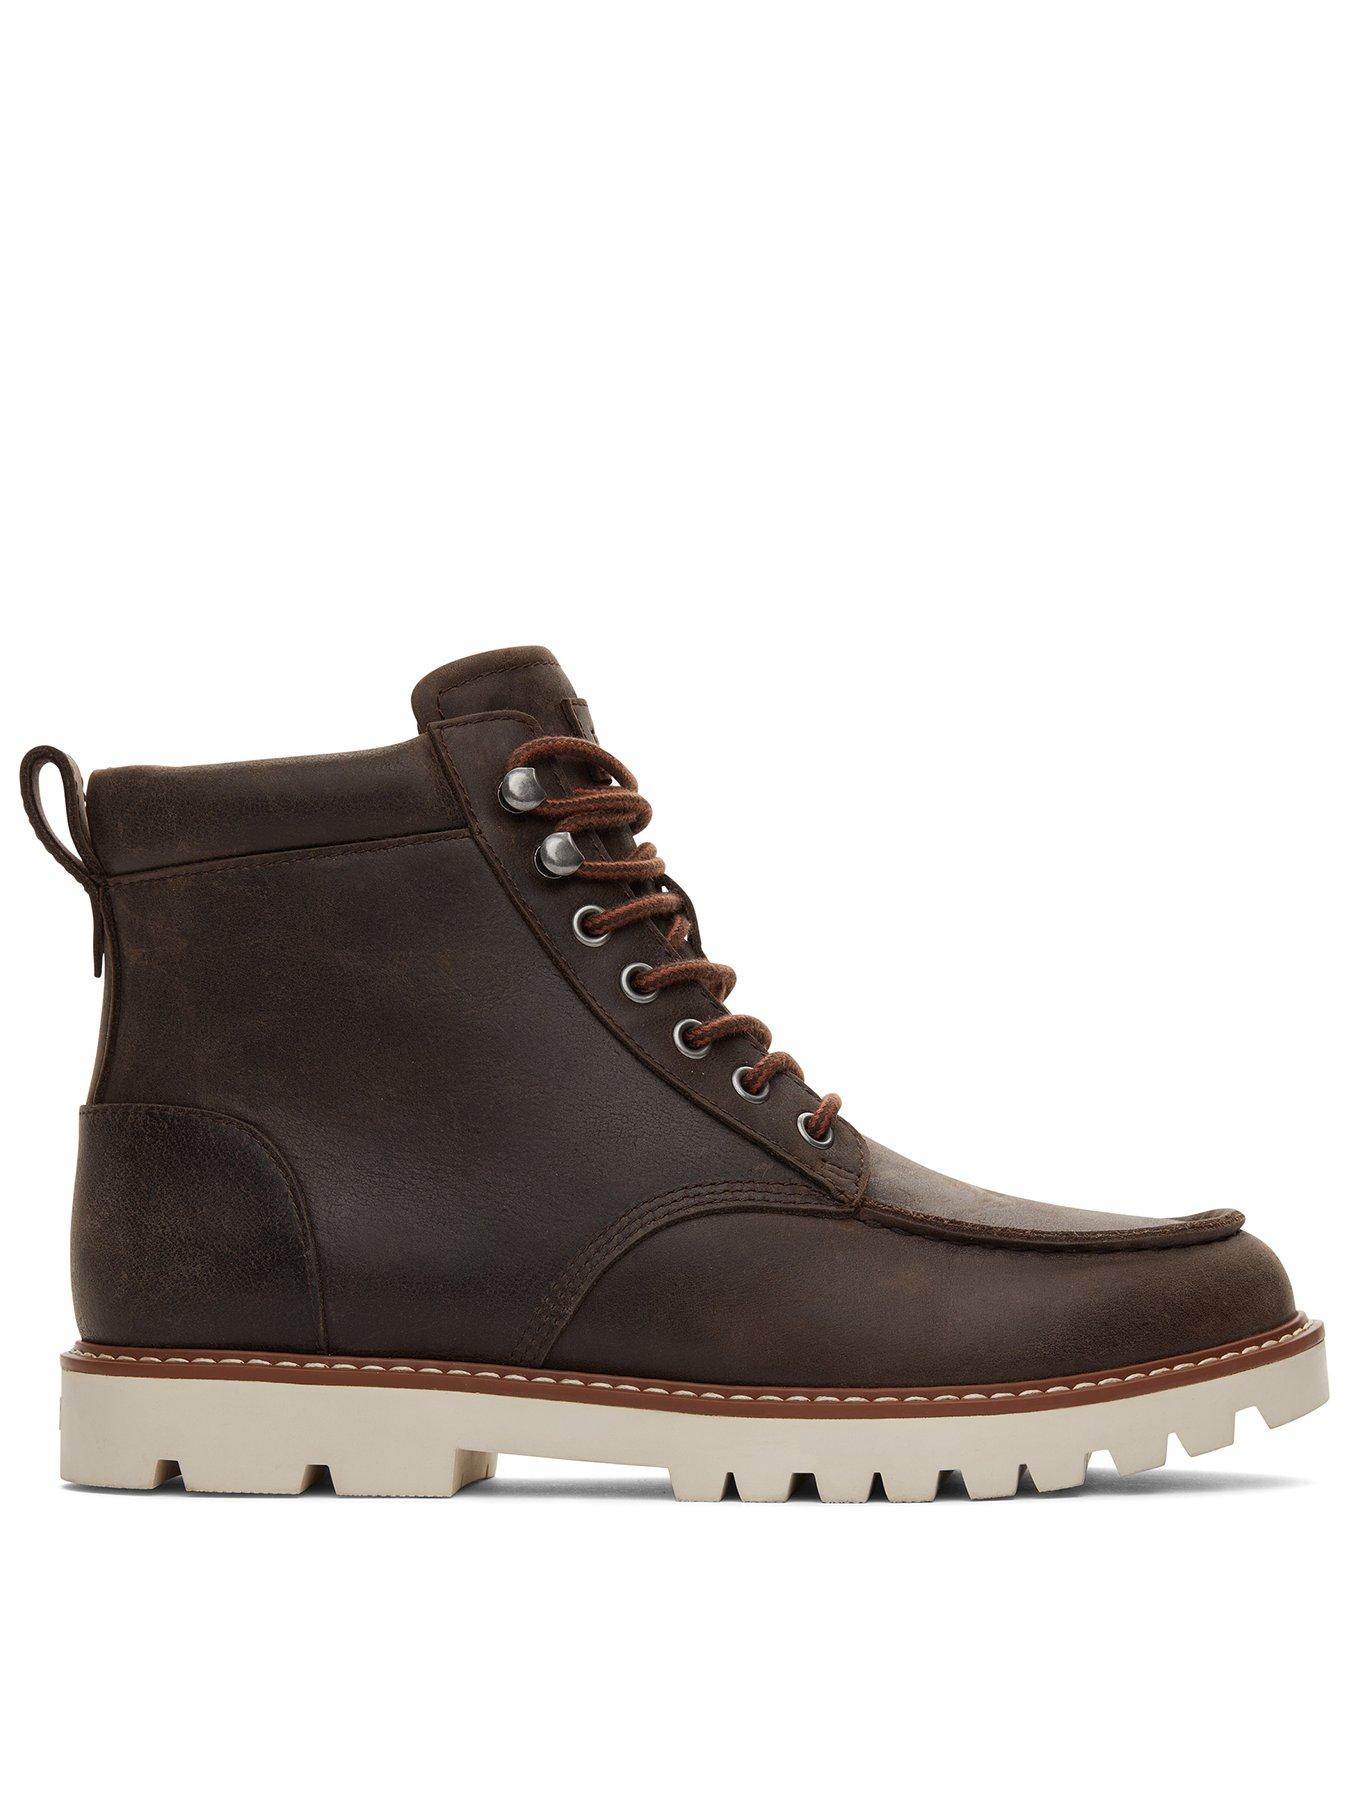 TOMS Men's Palomer Water Resistant Leather Boot - Dark Brown | very.co.uk